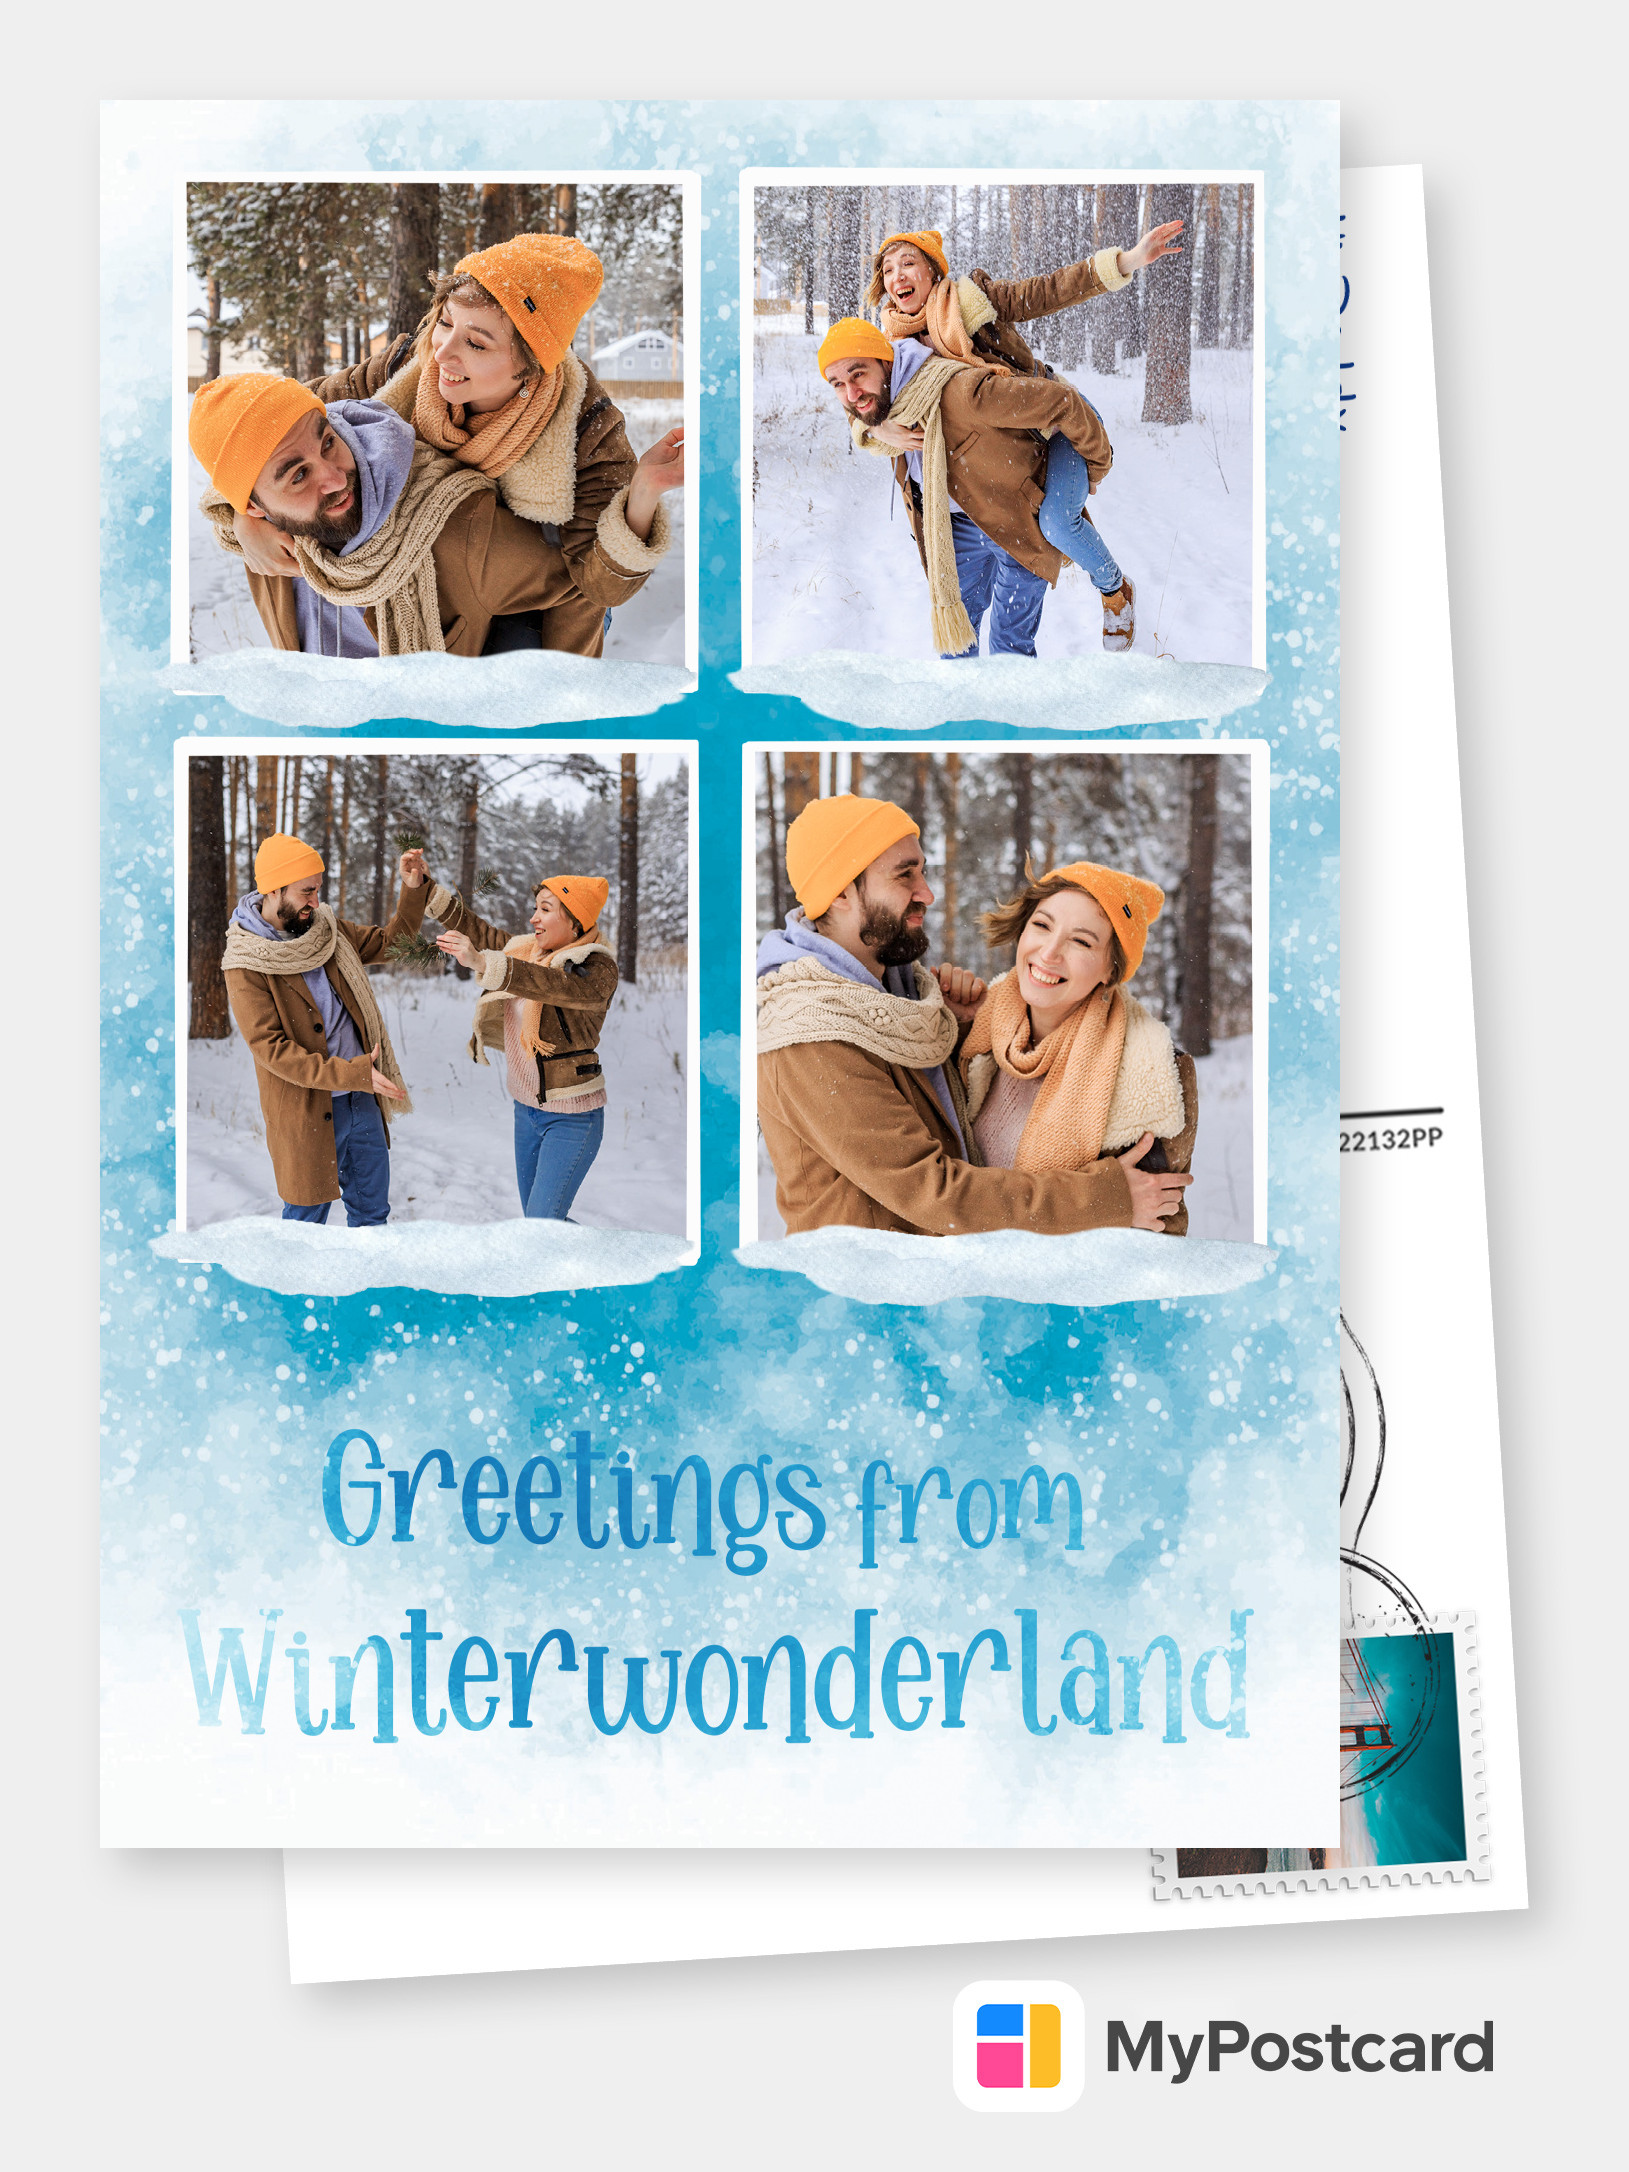 Greetings from Winterwonderland